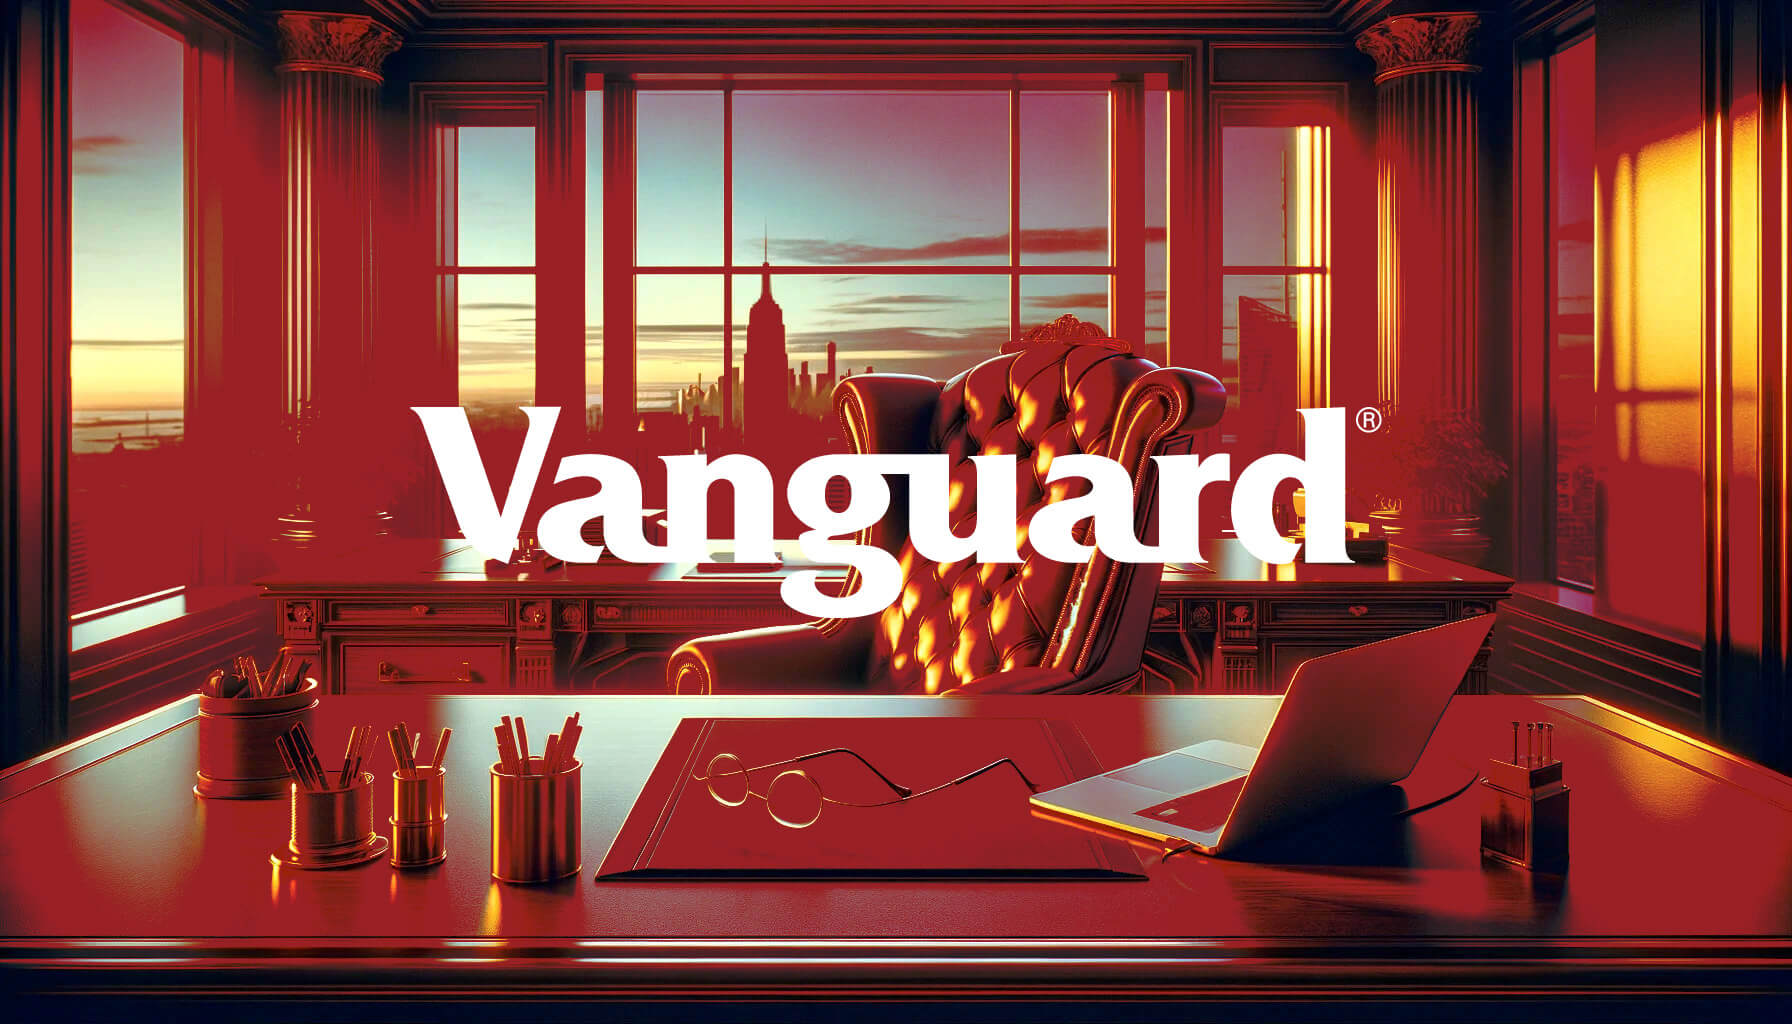 Vanguard CEO on Bitcoin: “Too Volatile”